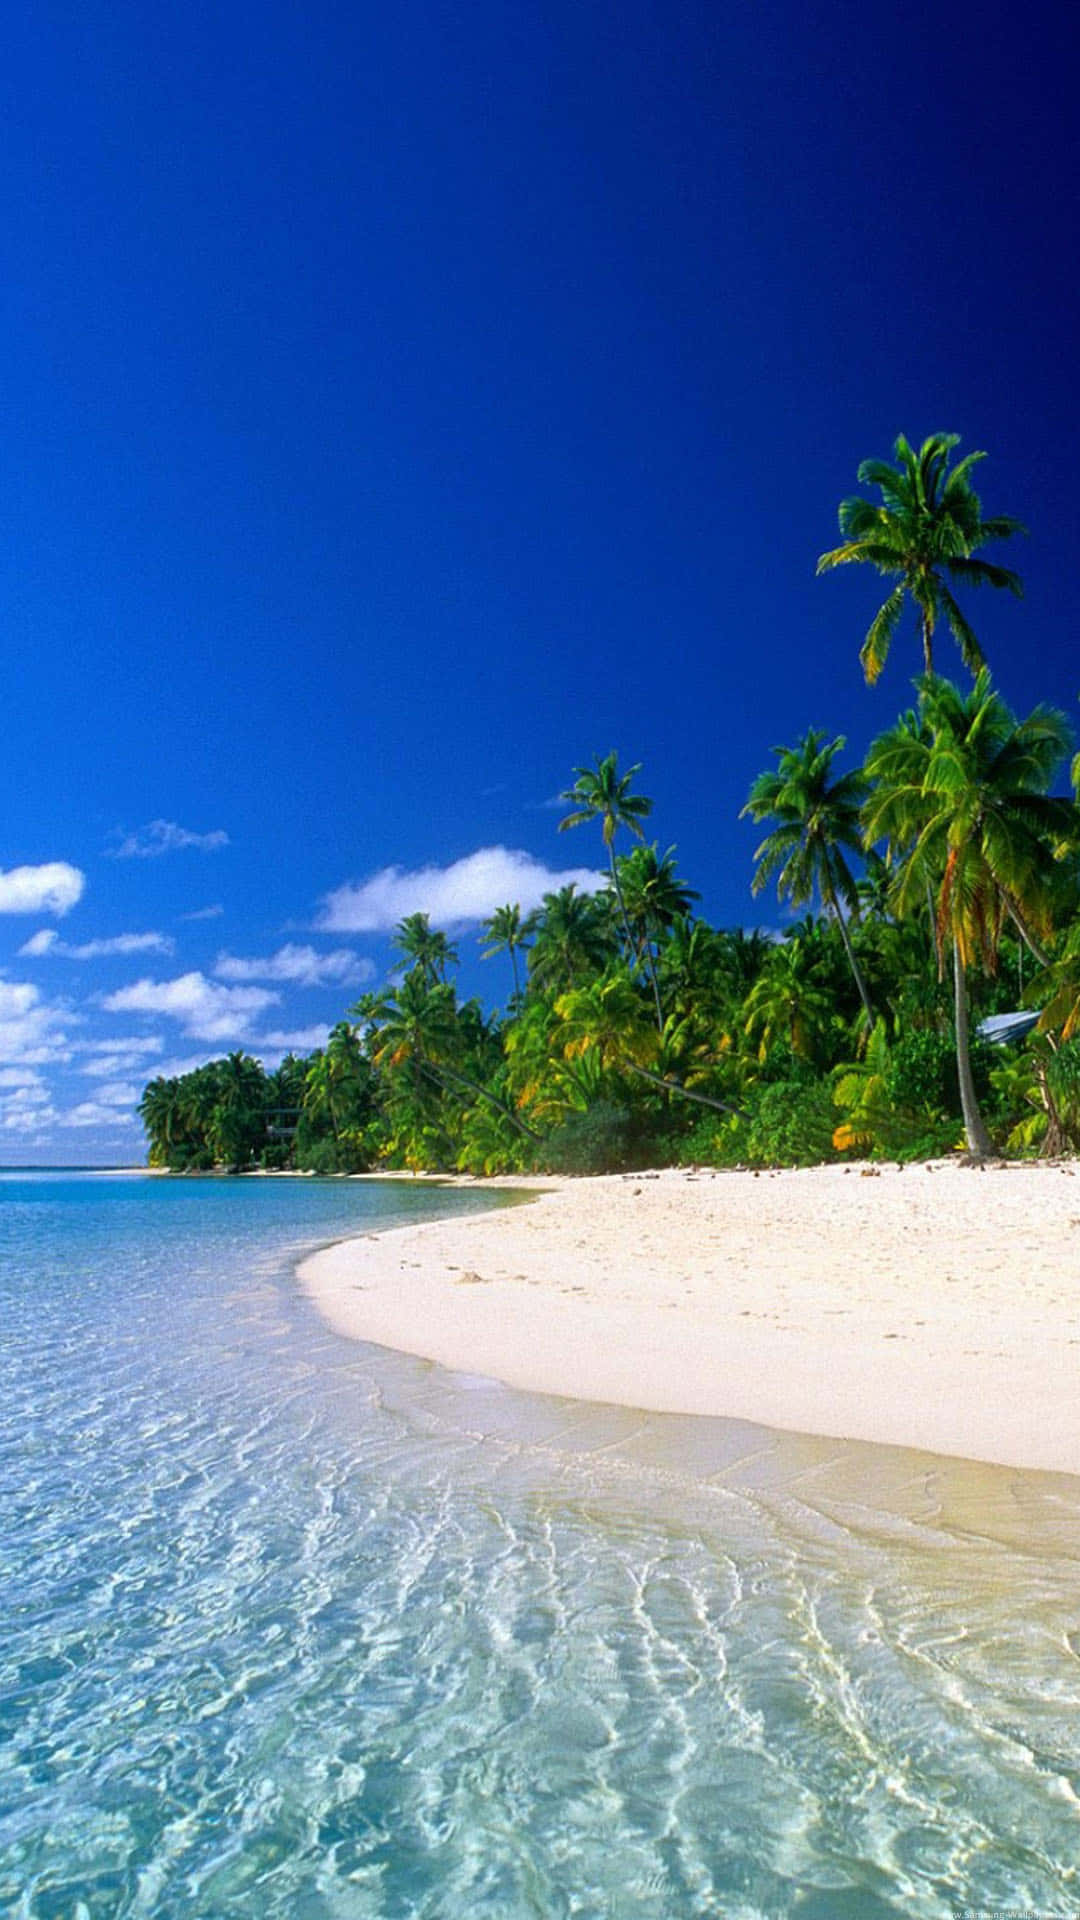 “Take in a tranquil tropical beach scene.” Wallpaper